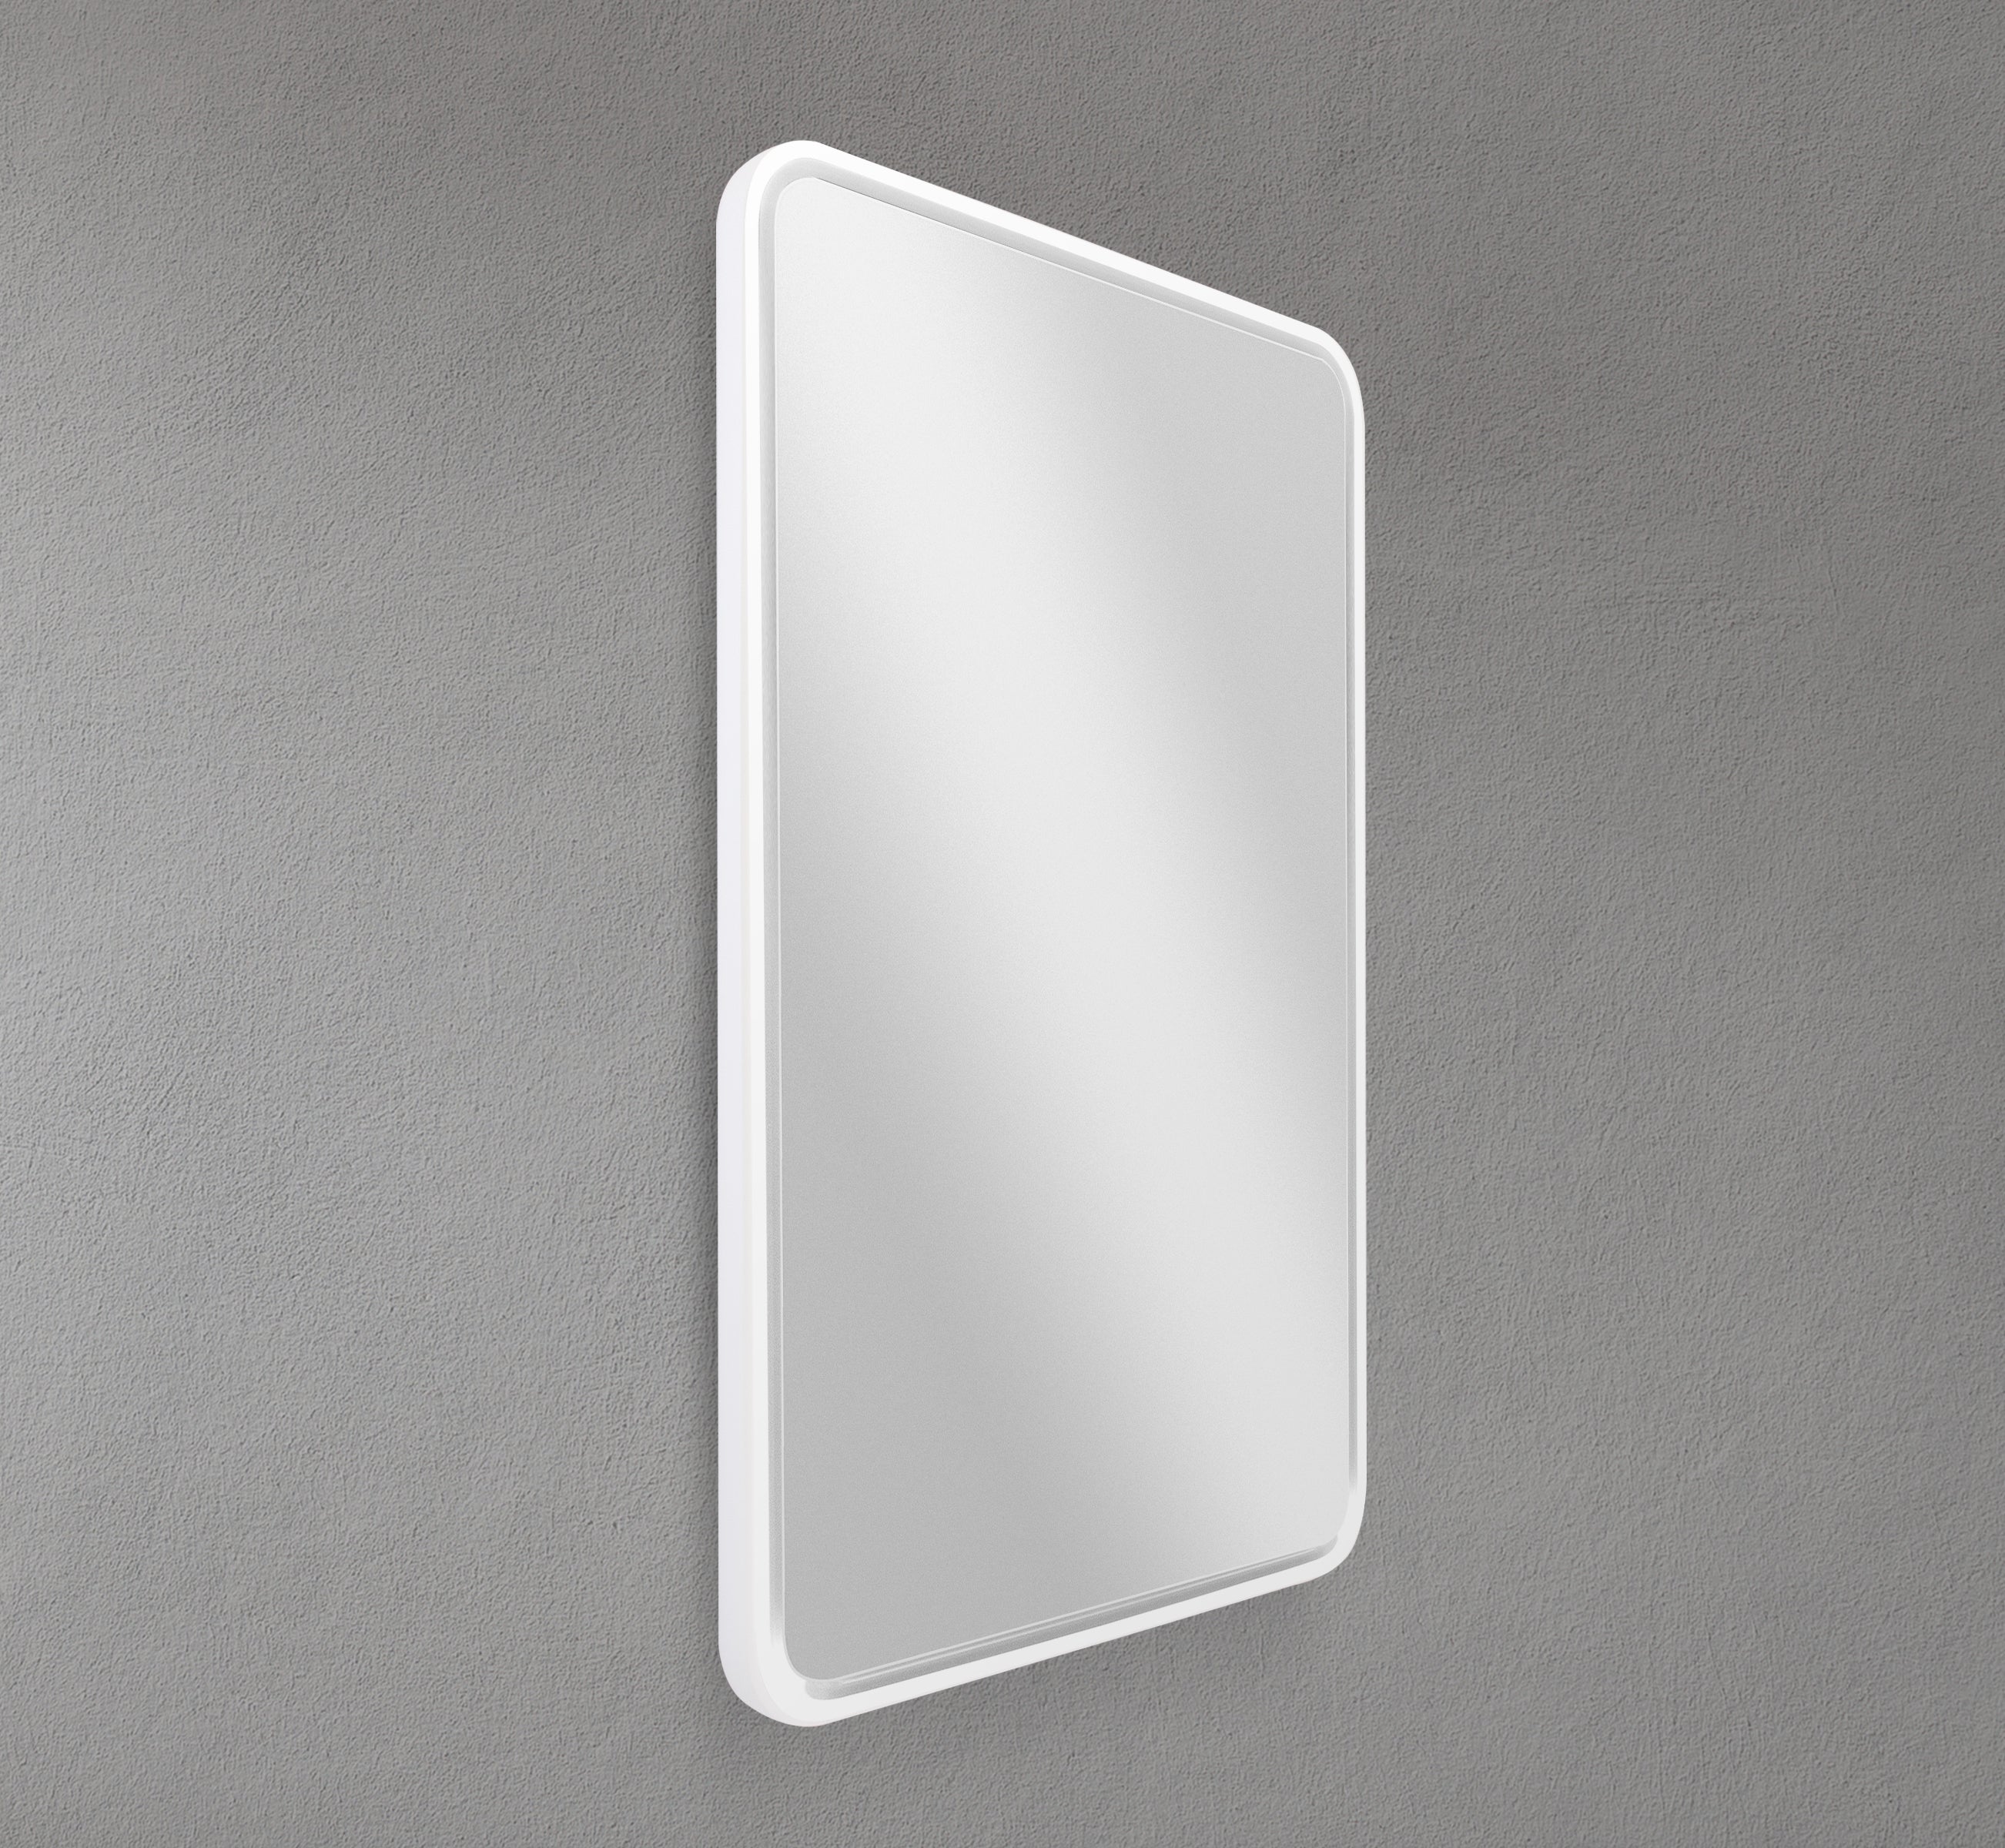 24" LED Framed Istone Rounded Edge Mirror